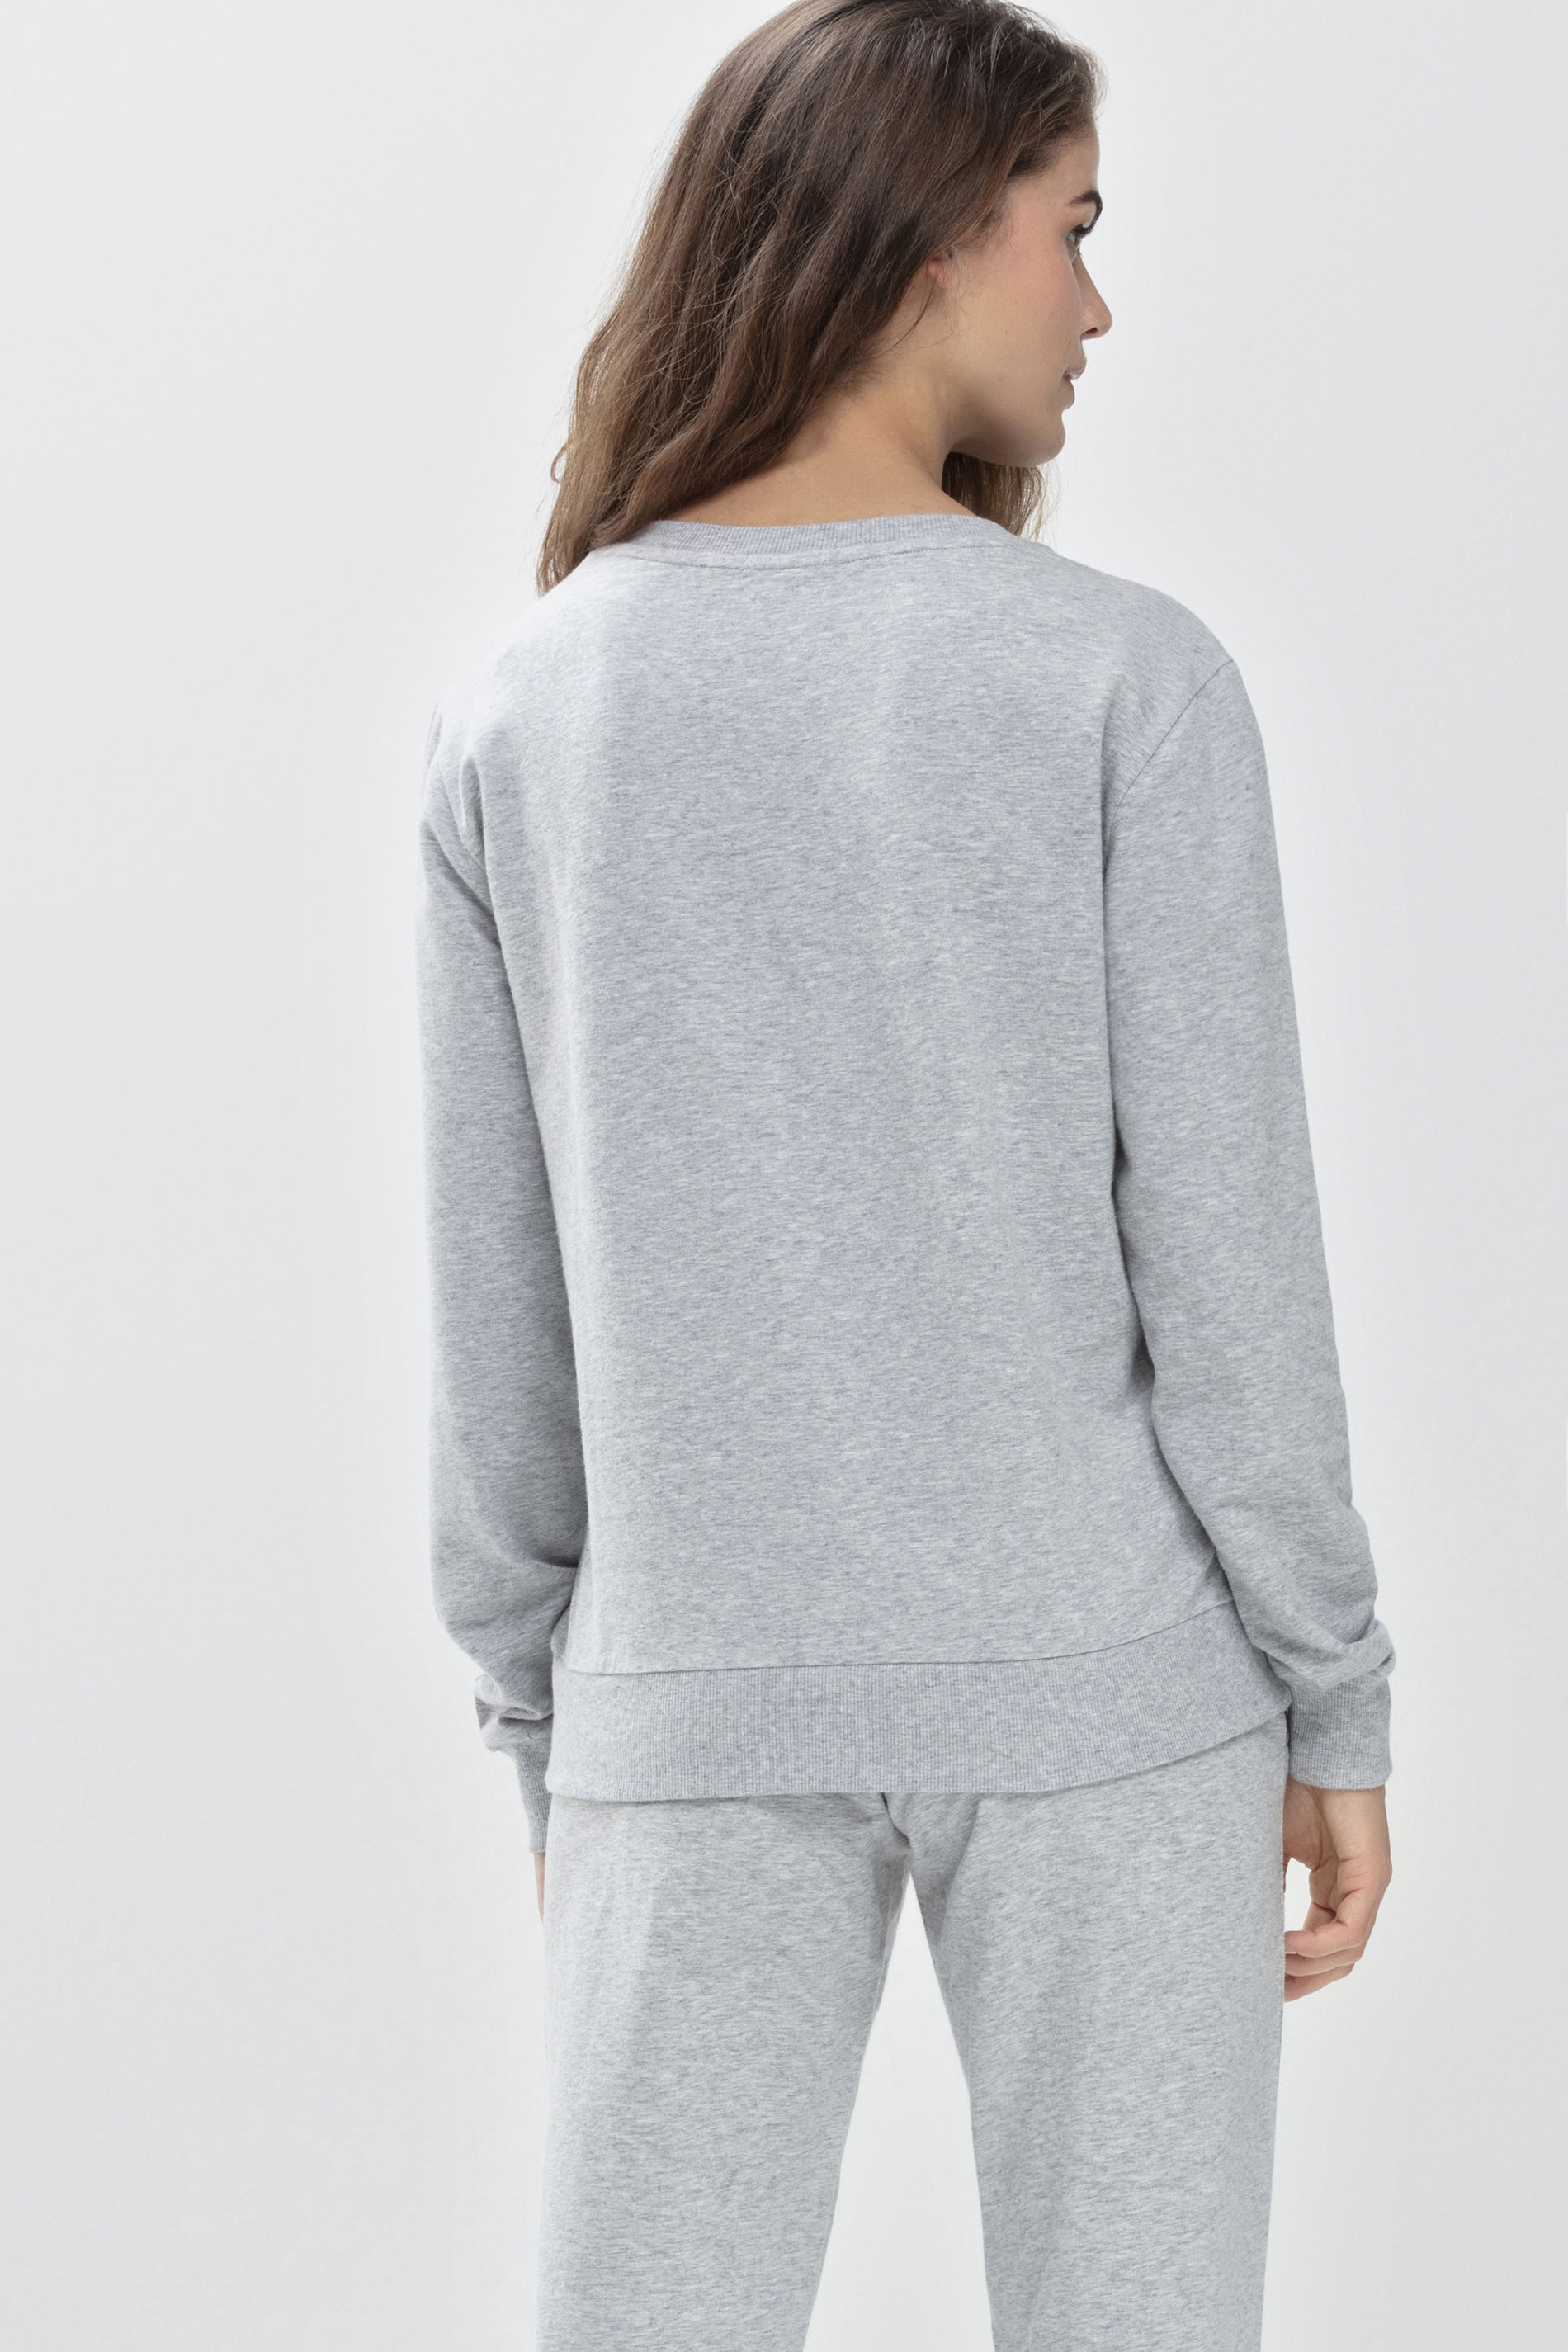 Sweater Grey Melange Night2Day Rear View | mey®